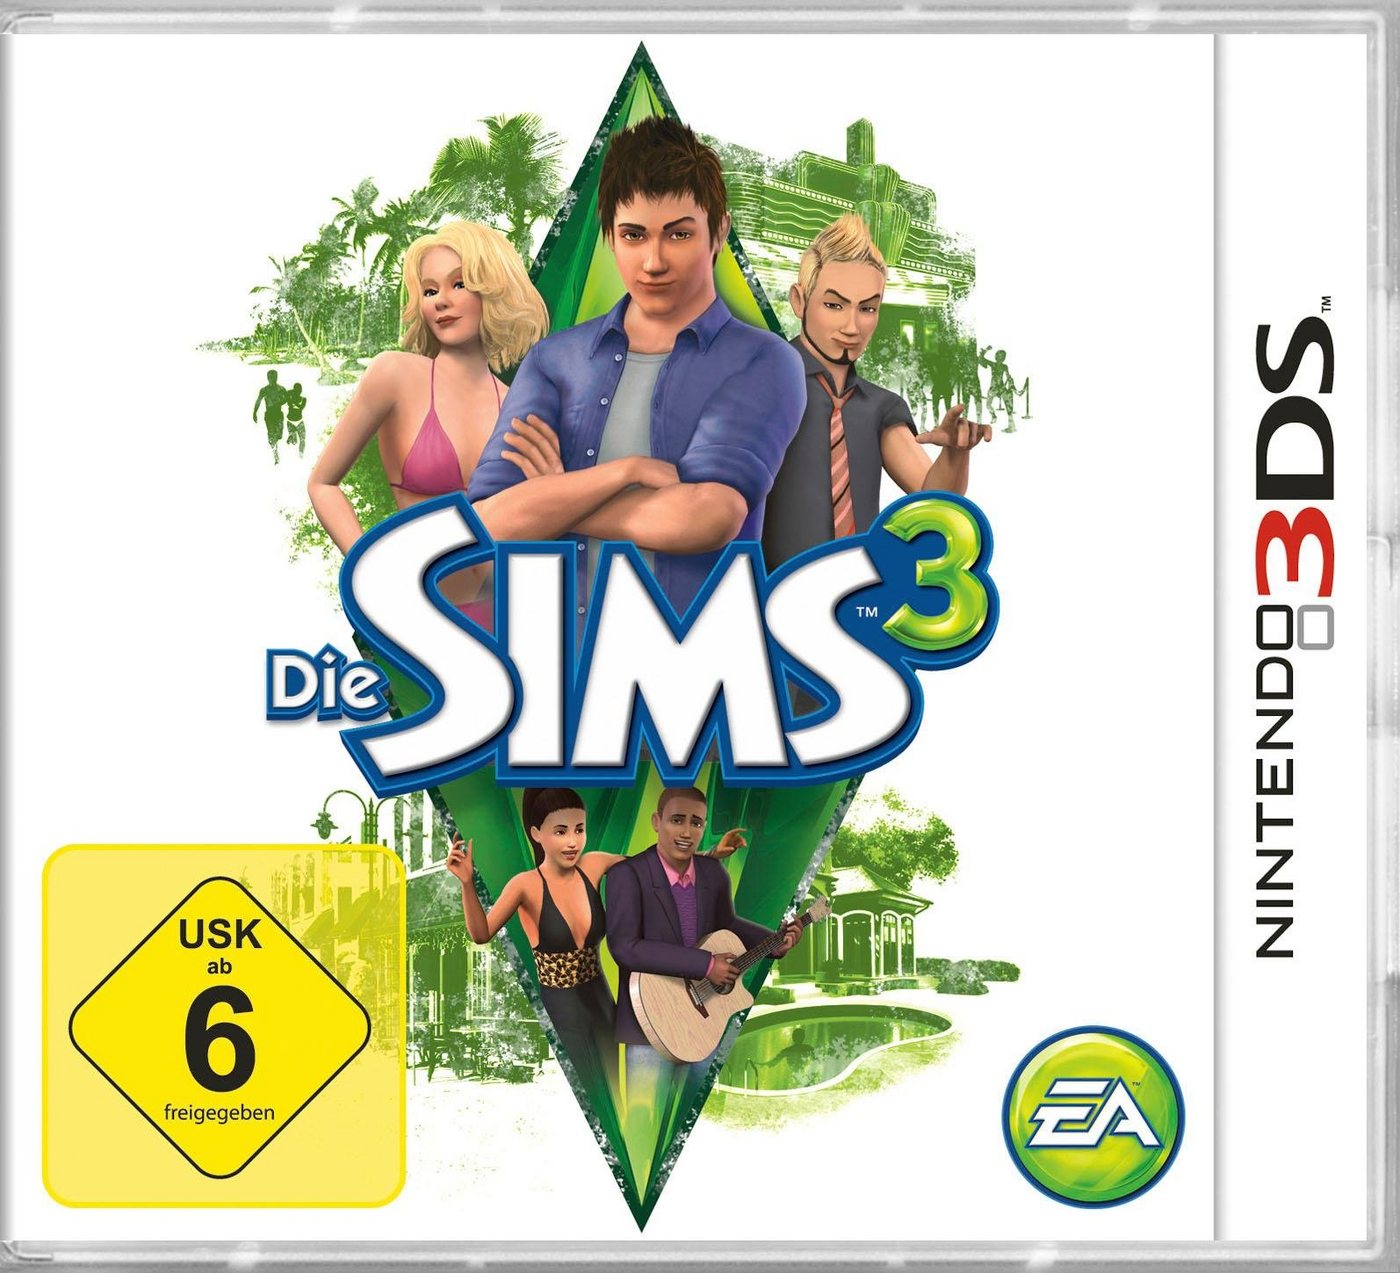 Die Sims 3 Nintendo 3DS, Software Pyramide von Electronic Arts